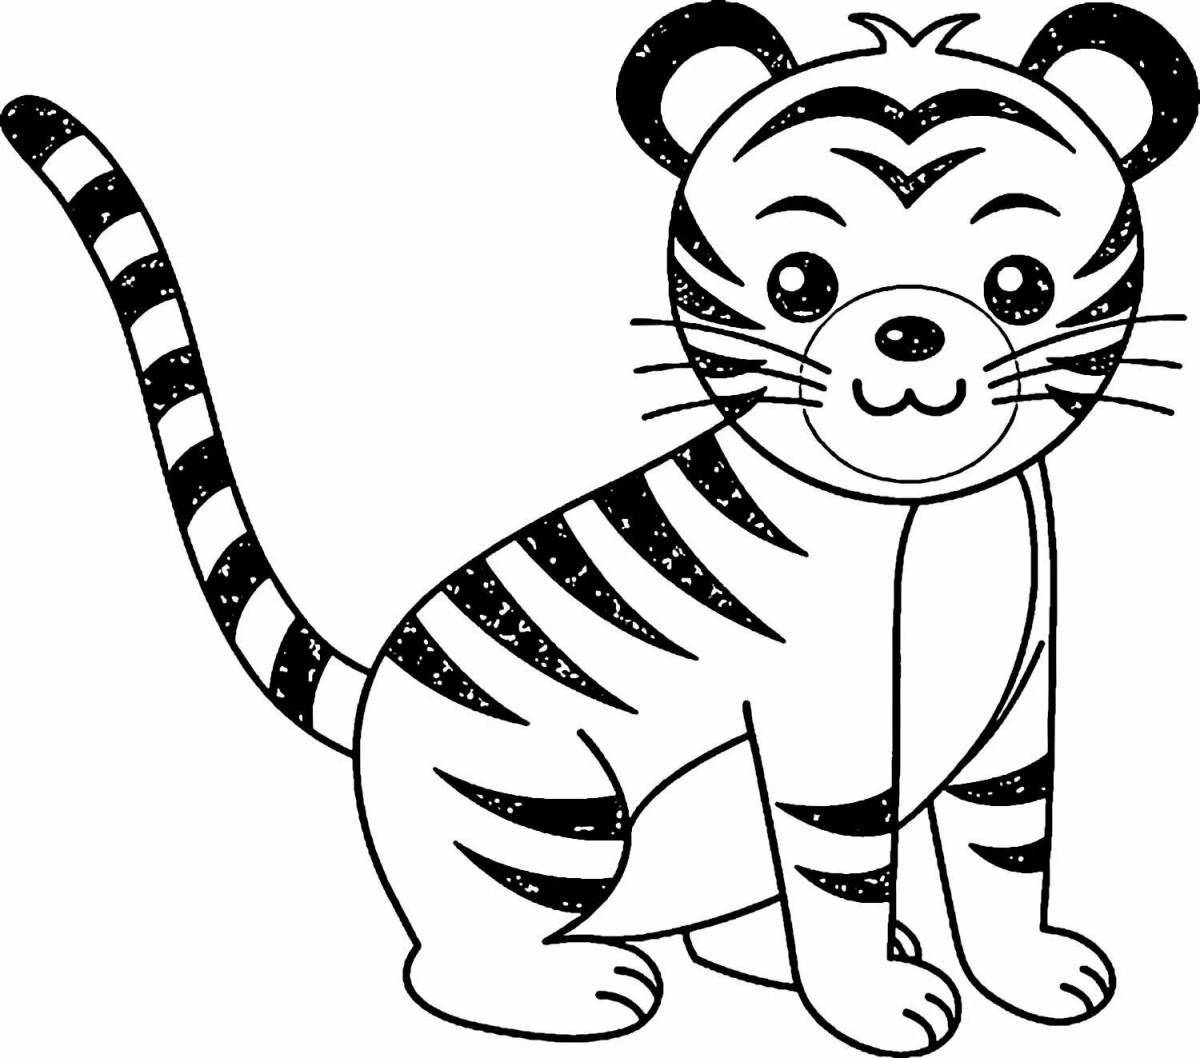 Coloring book playful tiger cub